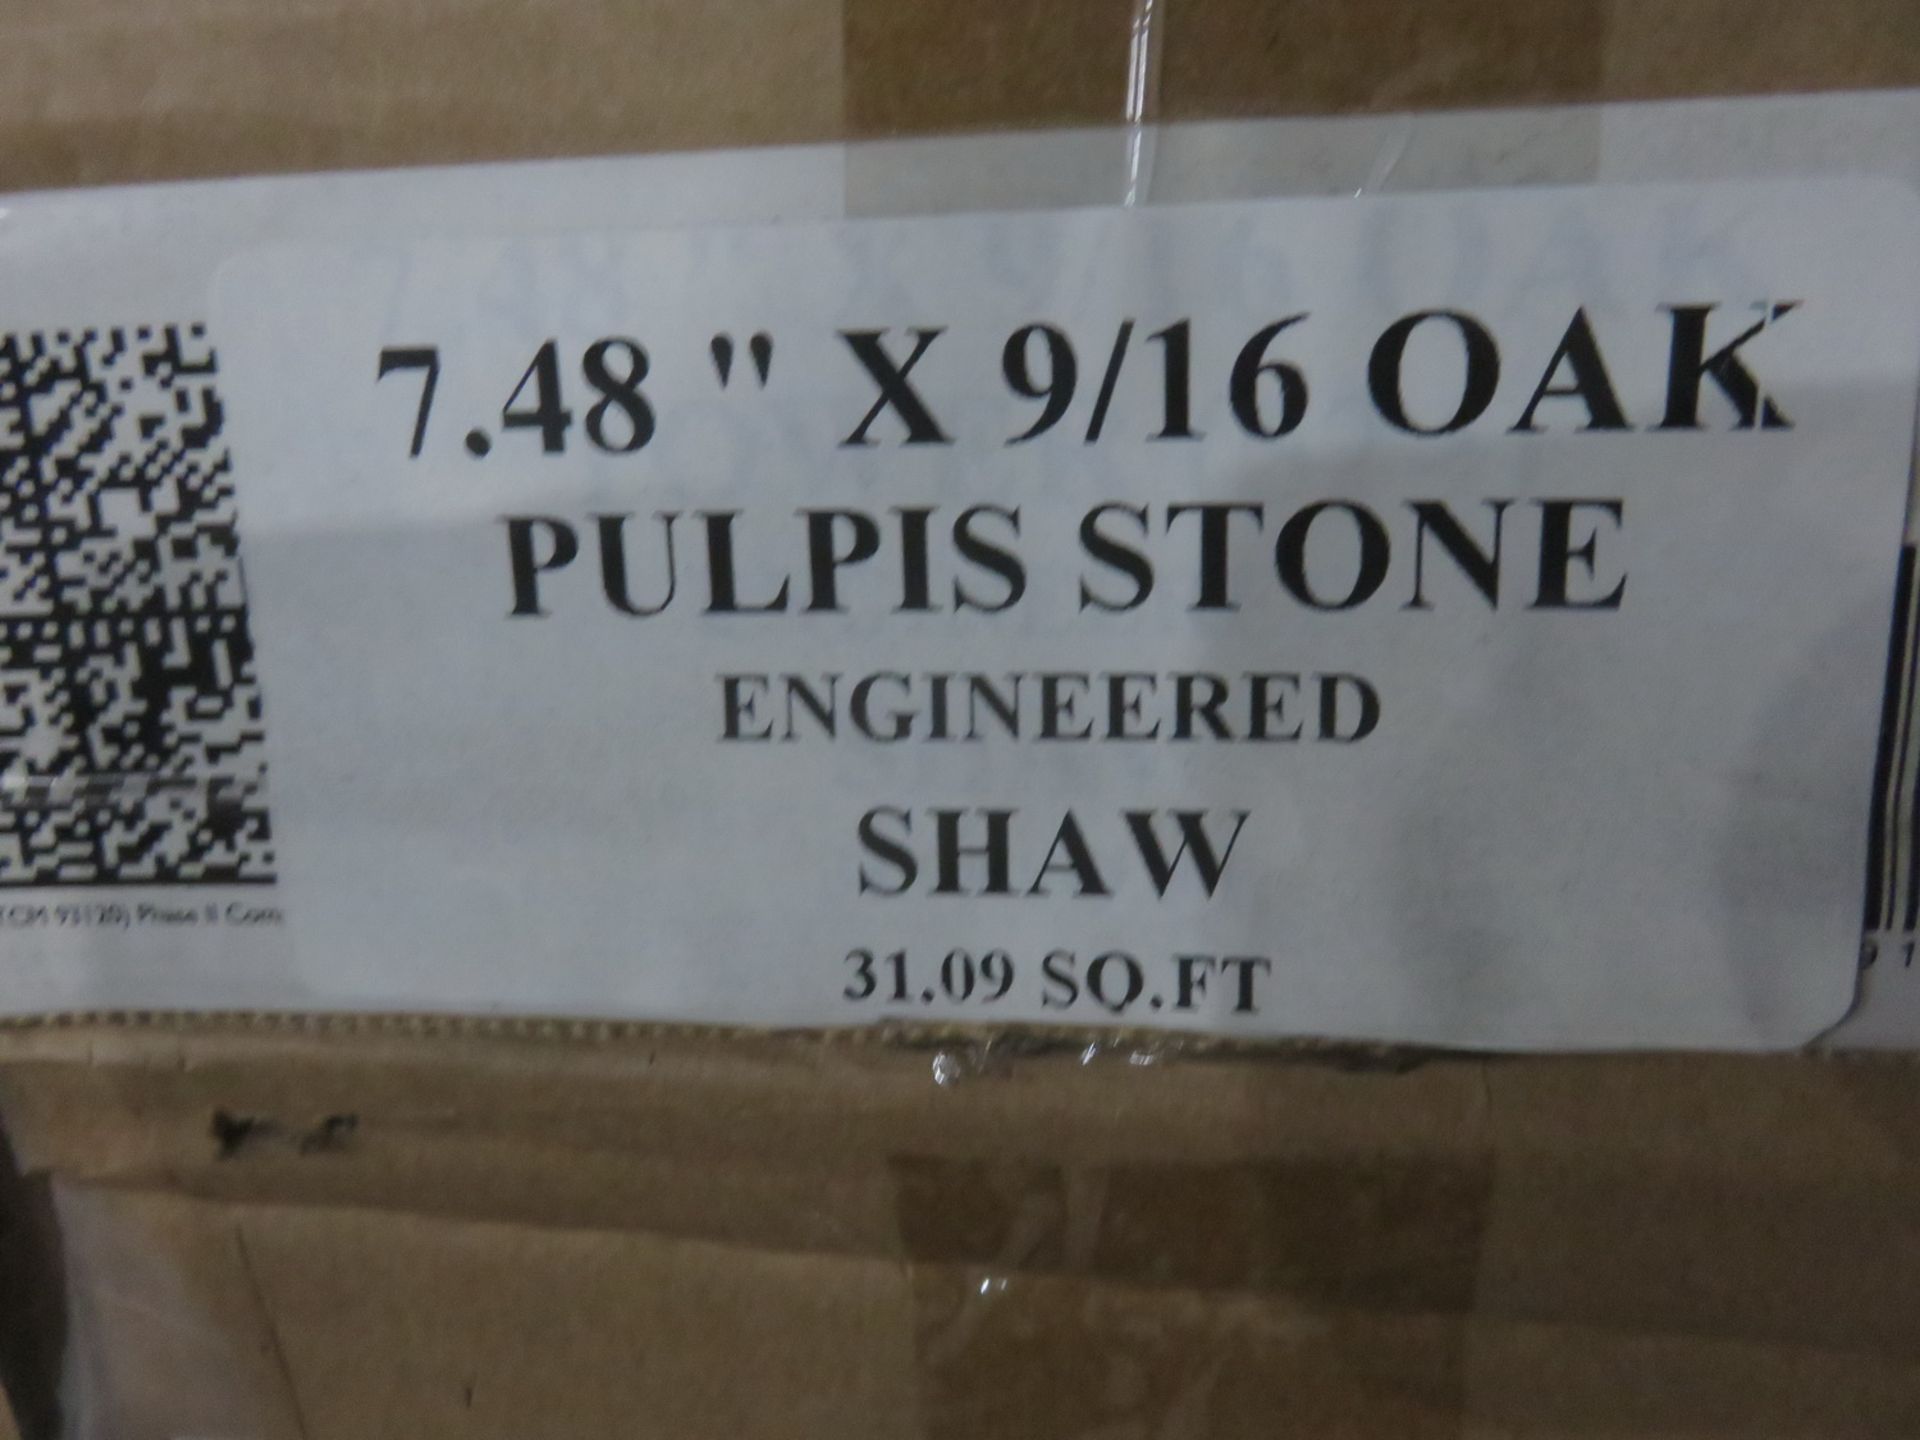 BOXES - SHAW OAK PULPIS STONE 7.48" X 9/16 ENGINEERED HARDWOOD FLOORING (31.09 SQFT/BOX) - Image 2 of 3